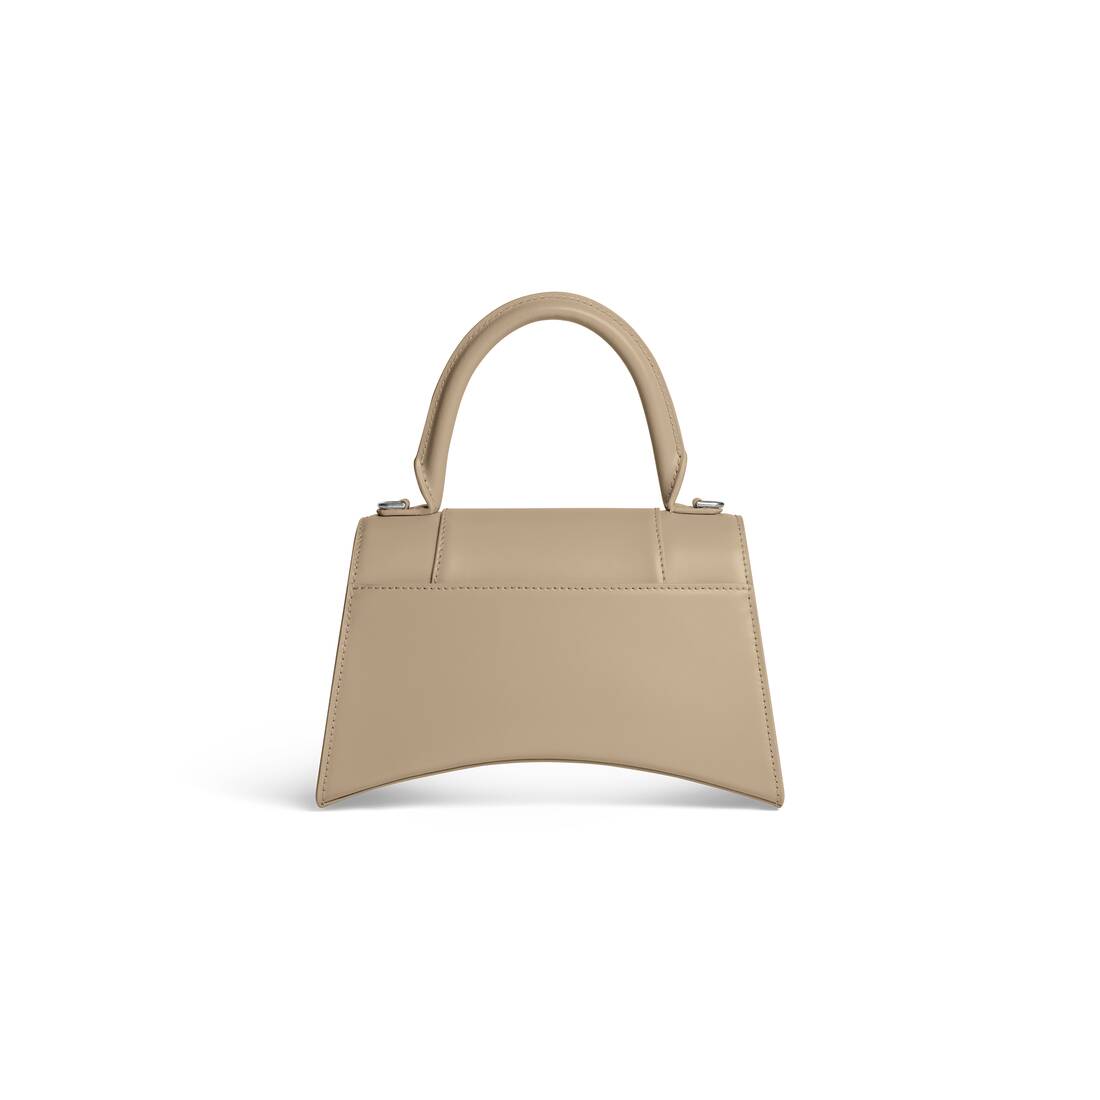 Beige Hourglass S leather bag, Balenciaga